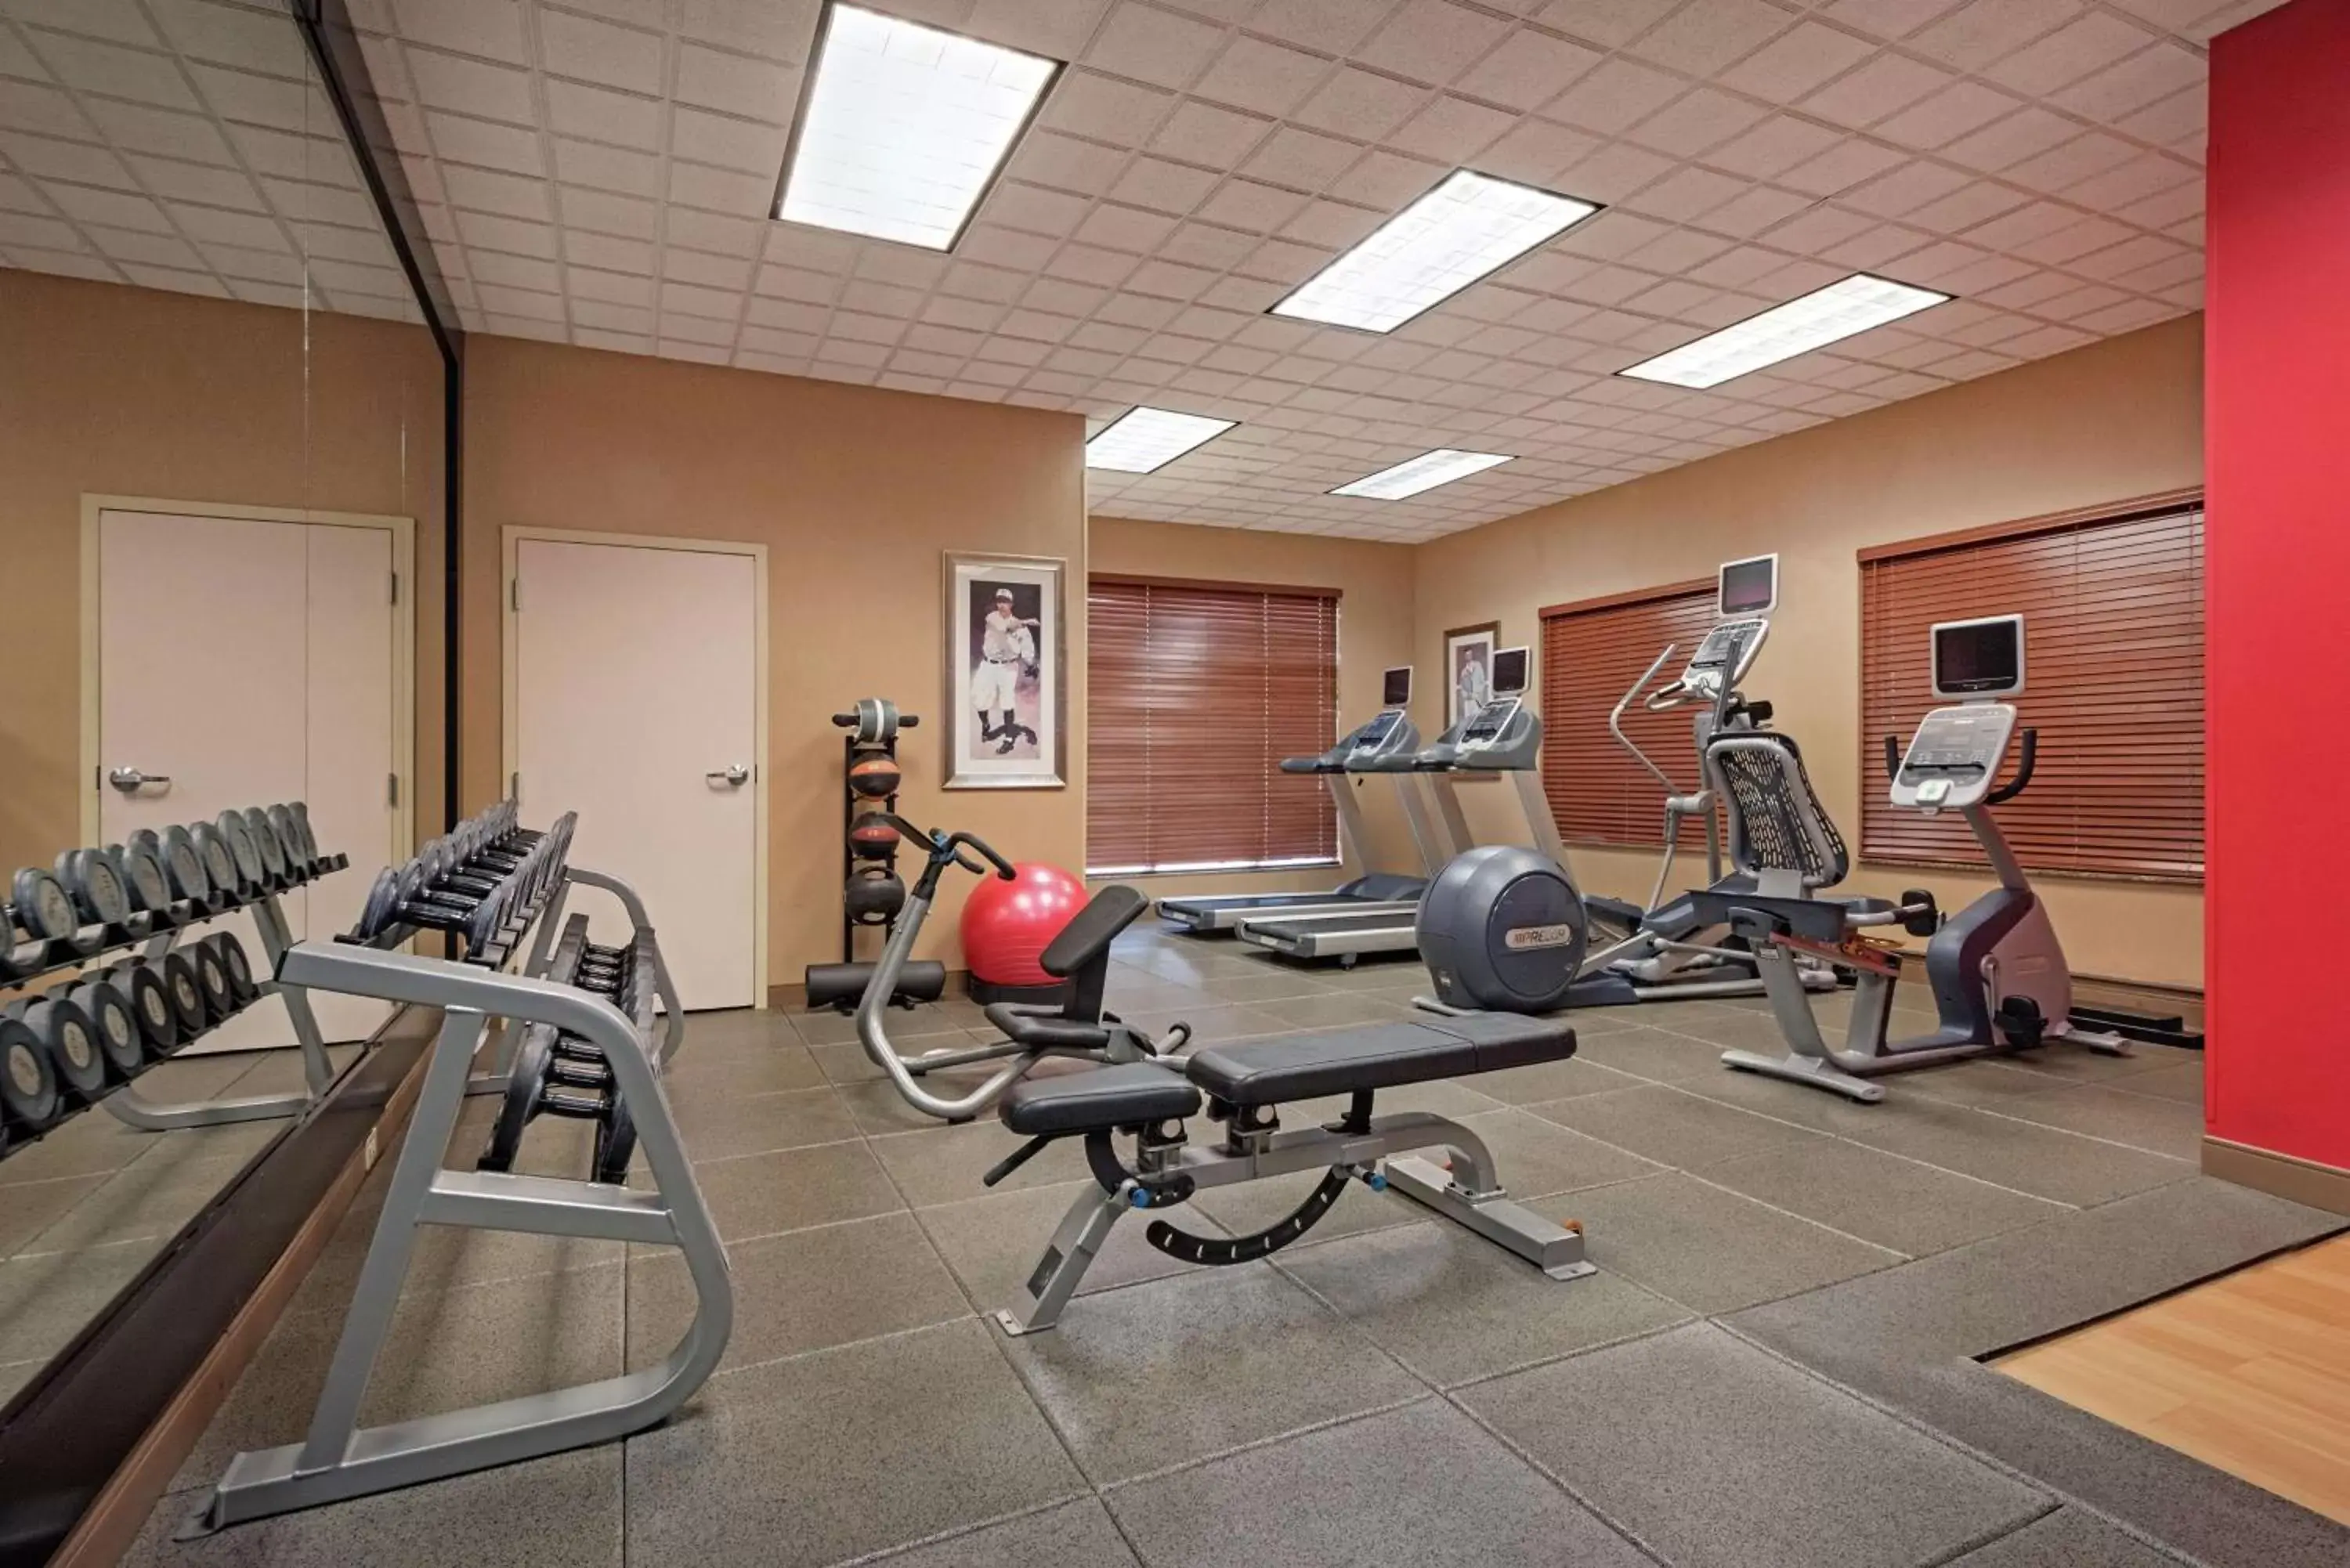 Fitness centre/facilities, Fitness Center/Facilities in Hilton Garden Inn Meridian